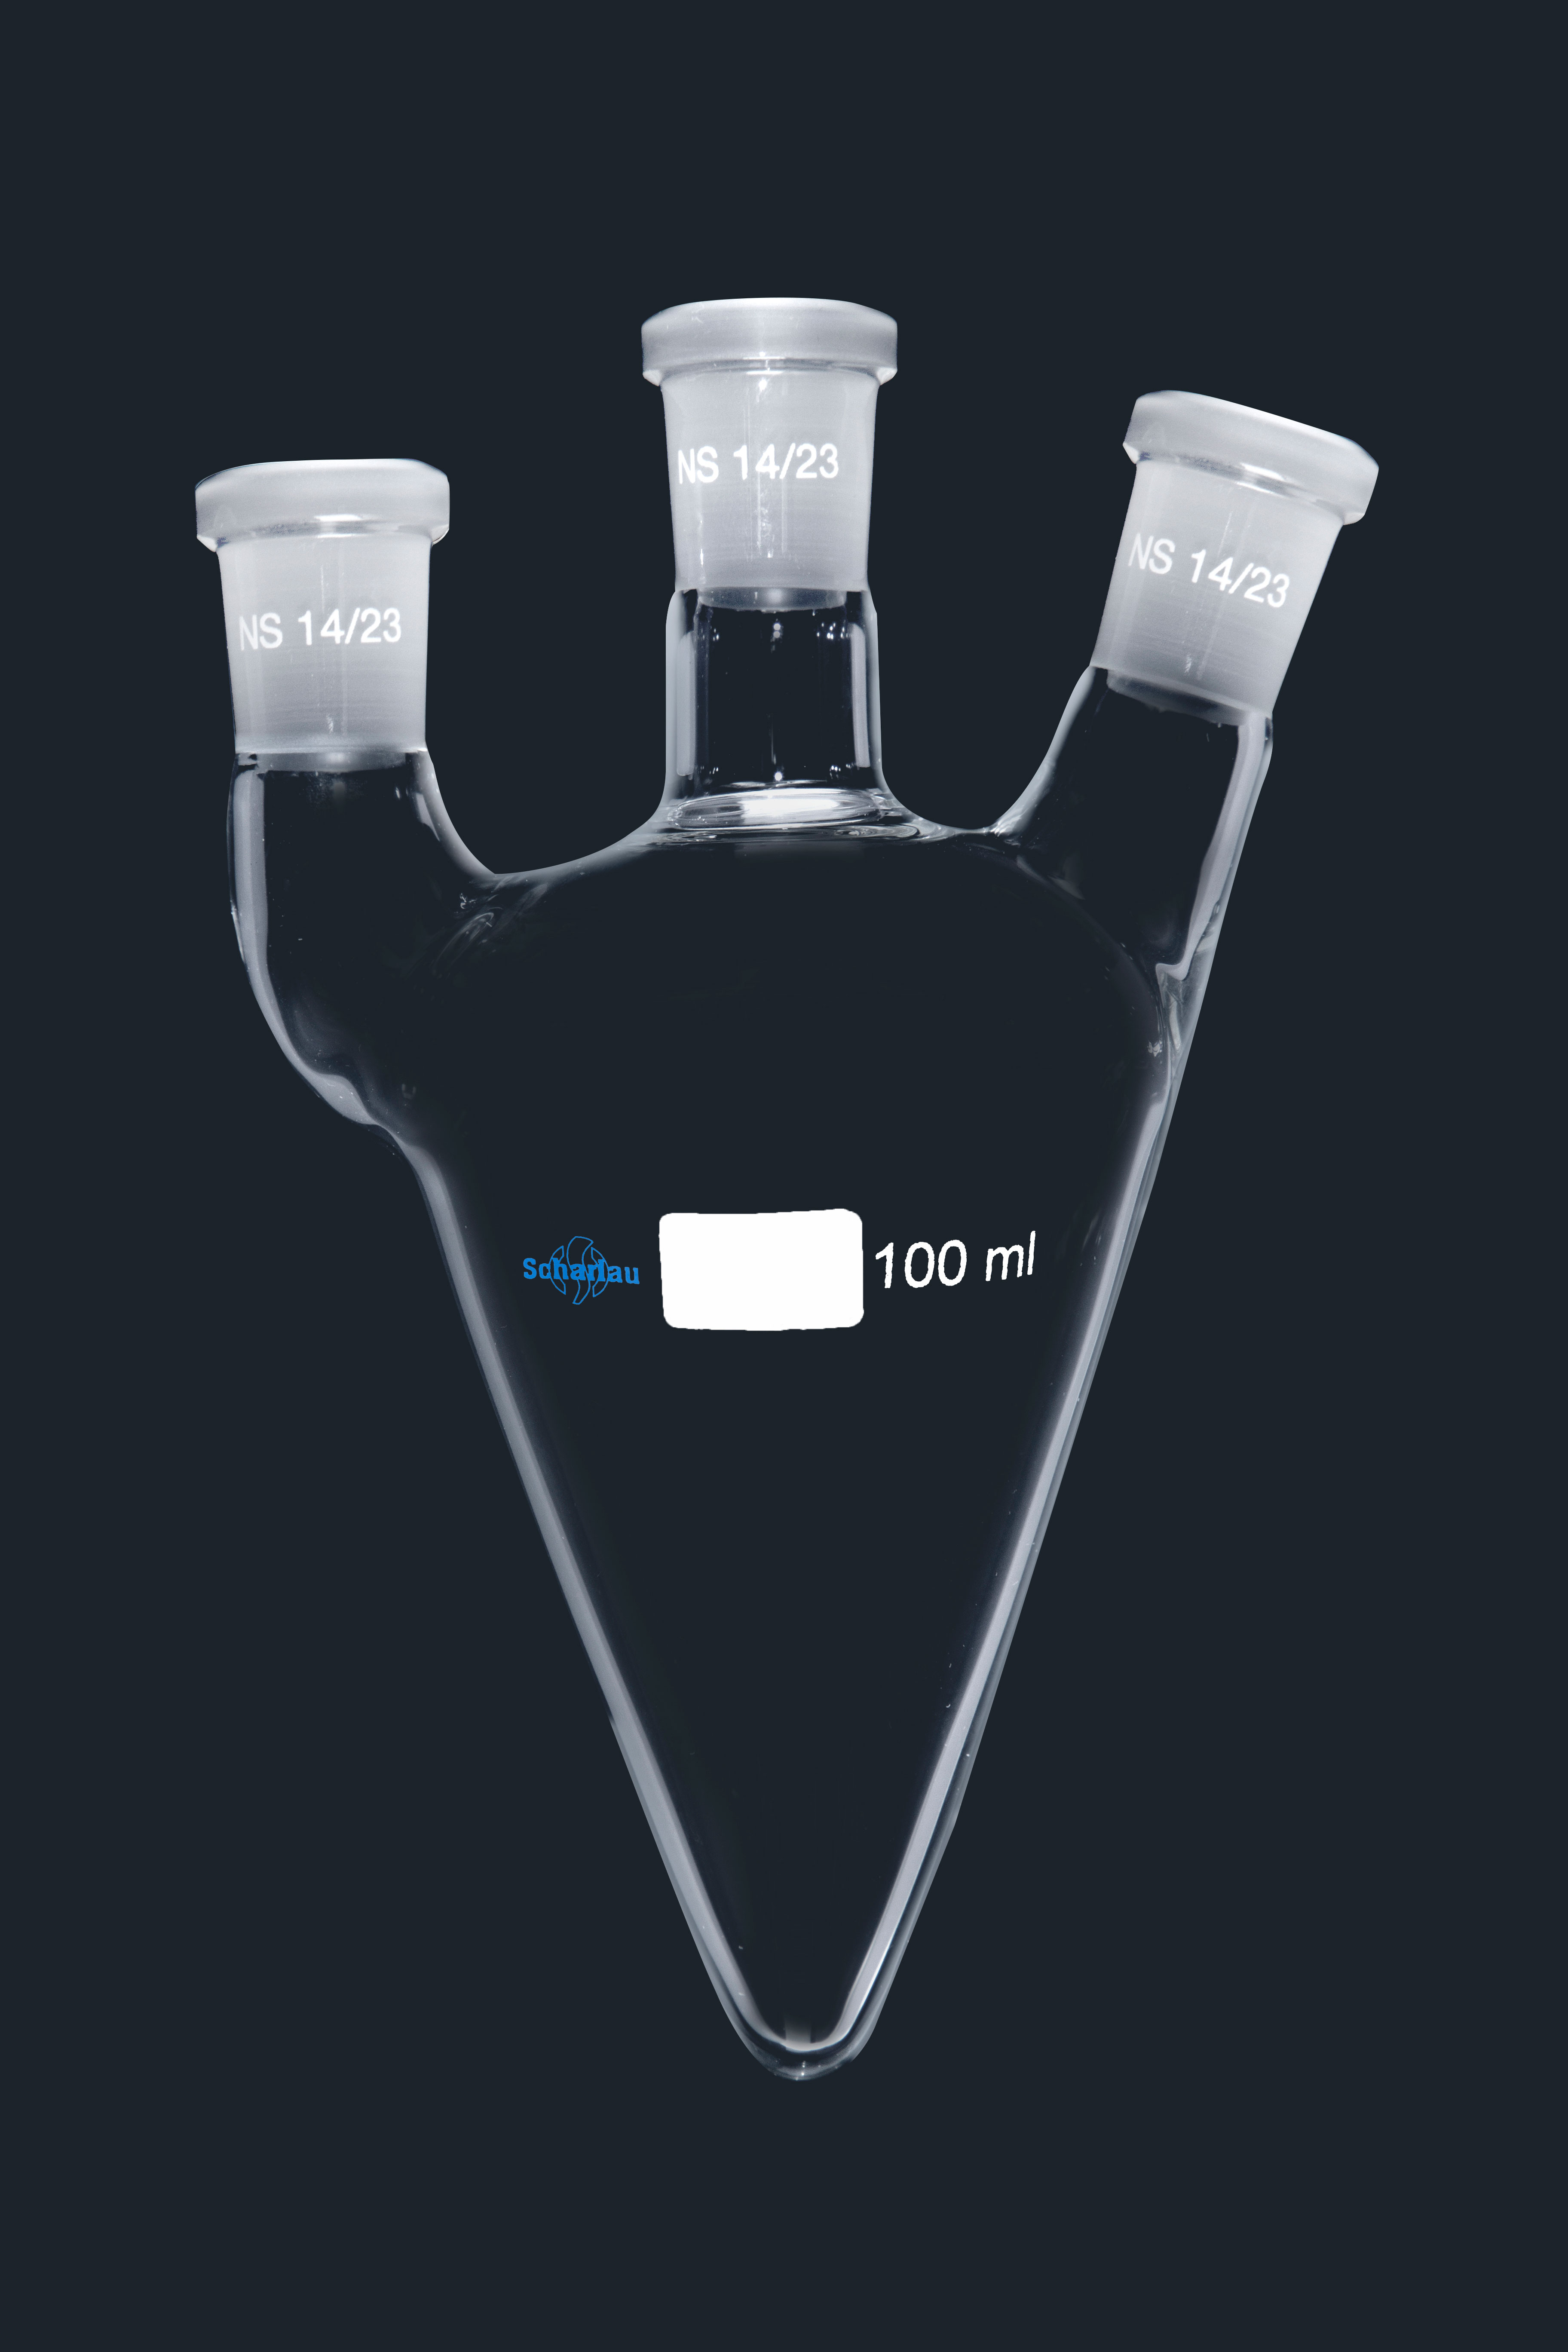 Pear shaped boiling flask with three necks. SCHARLAU. Capacity (ml): 100. Socket: 3x14/23